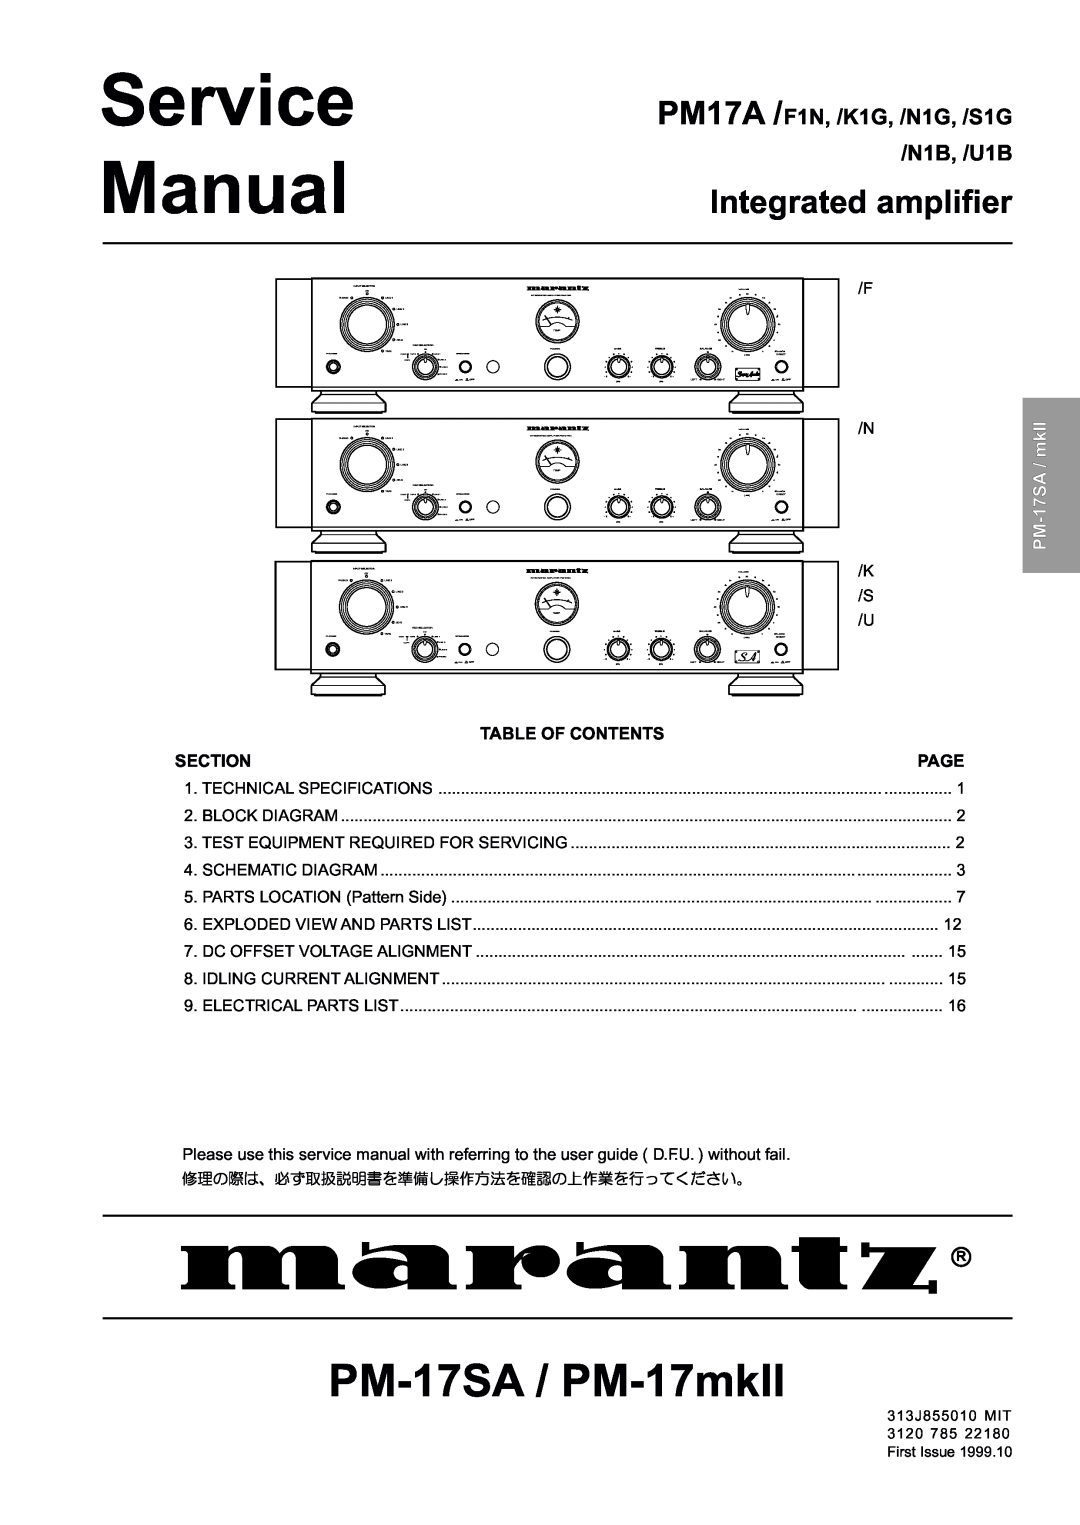 Marantz technical specifications PM-17SA / PM-17mkII, Integrated amplifier, PM17A /F1N, /K1G, /N1G, /S1G N1B, /U1B 